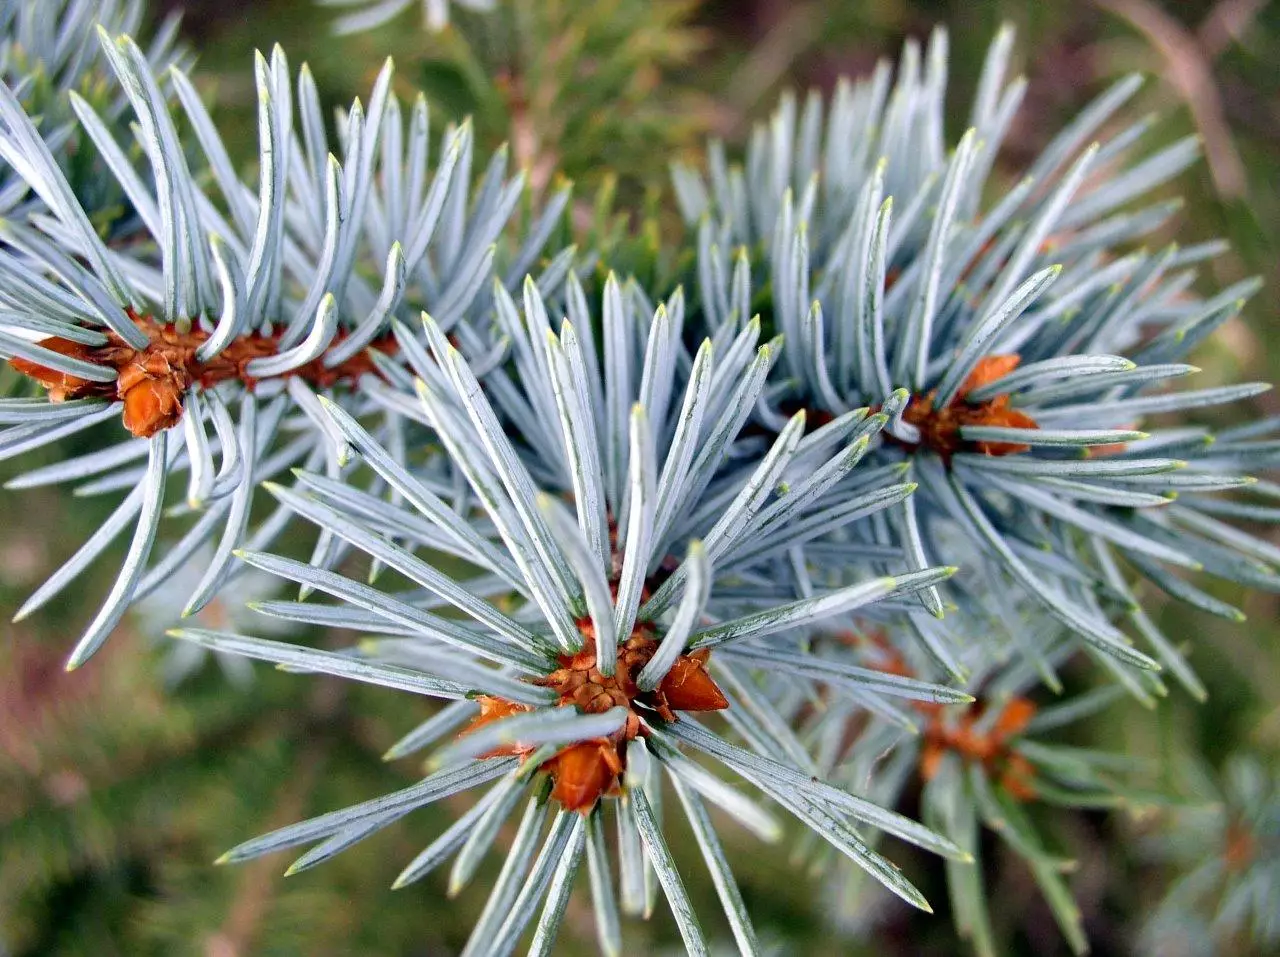 Colorado Blue Spruce Tree needles